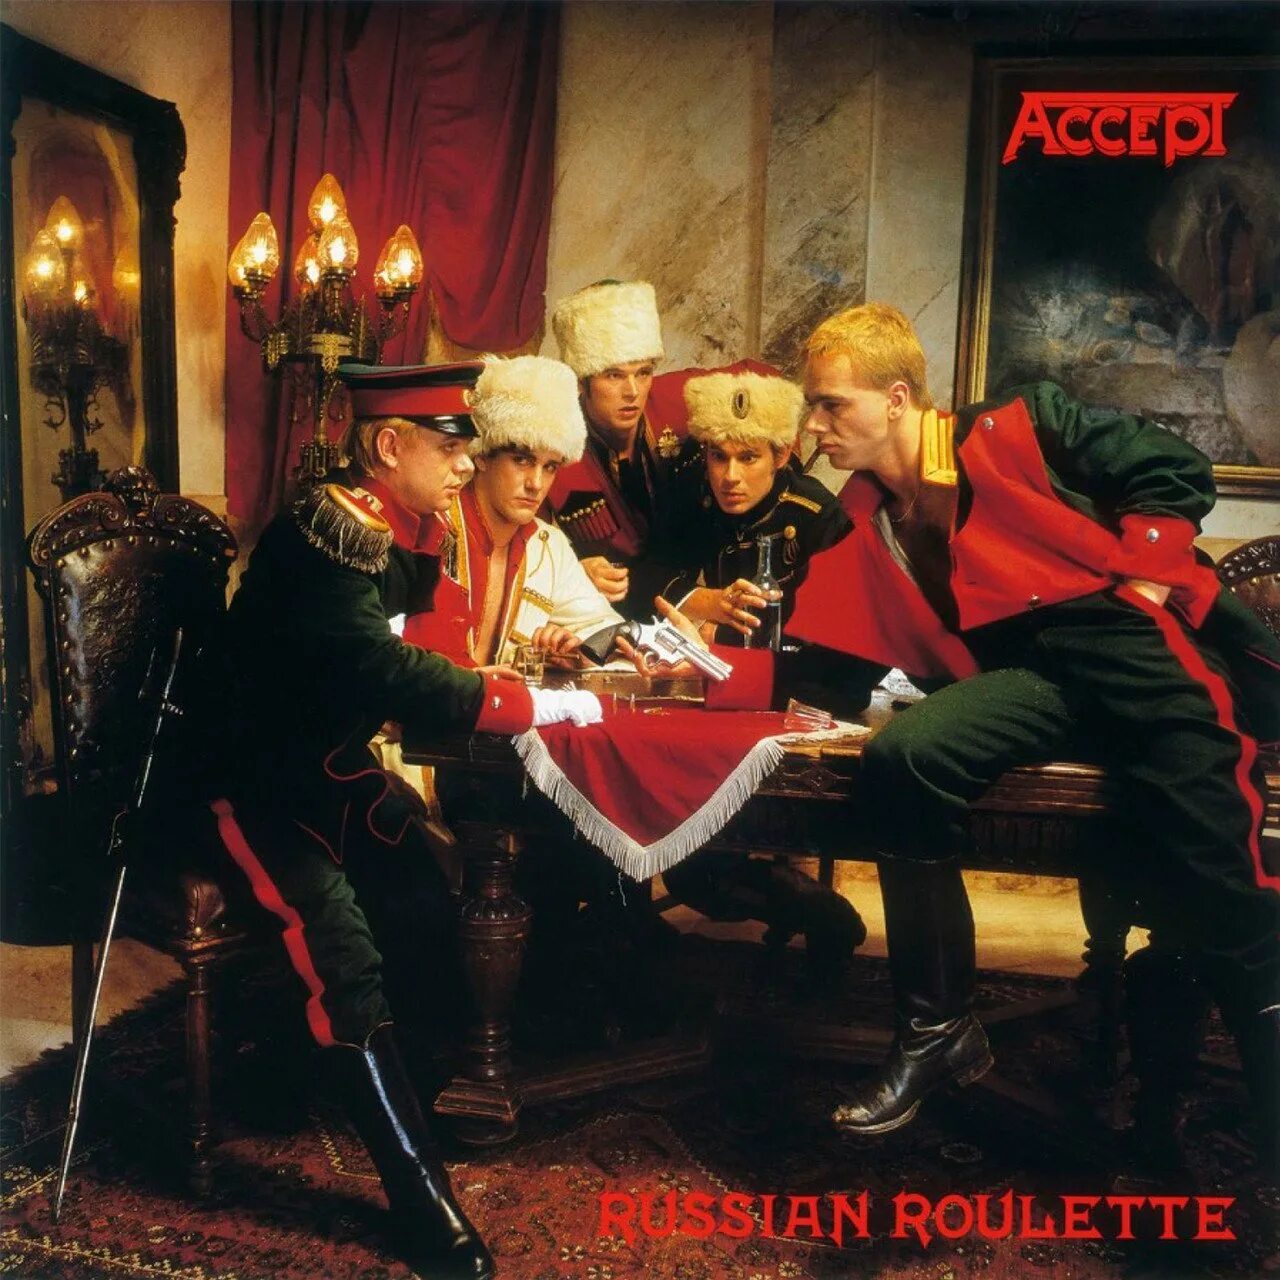 1986 - Russian Roulette. Accept Russian Roulette 1986 обложка. Accept Russian Roulette обложка альбома. Accept 1986 Russian Roulette обложка альбома.